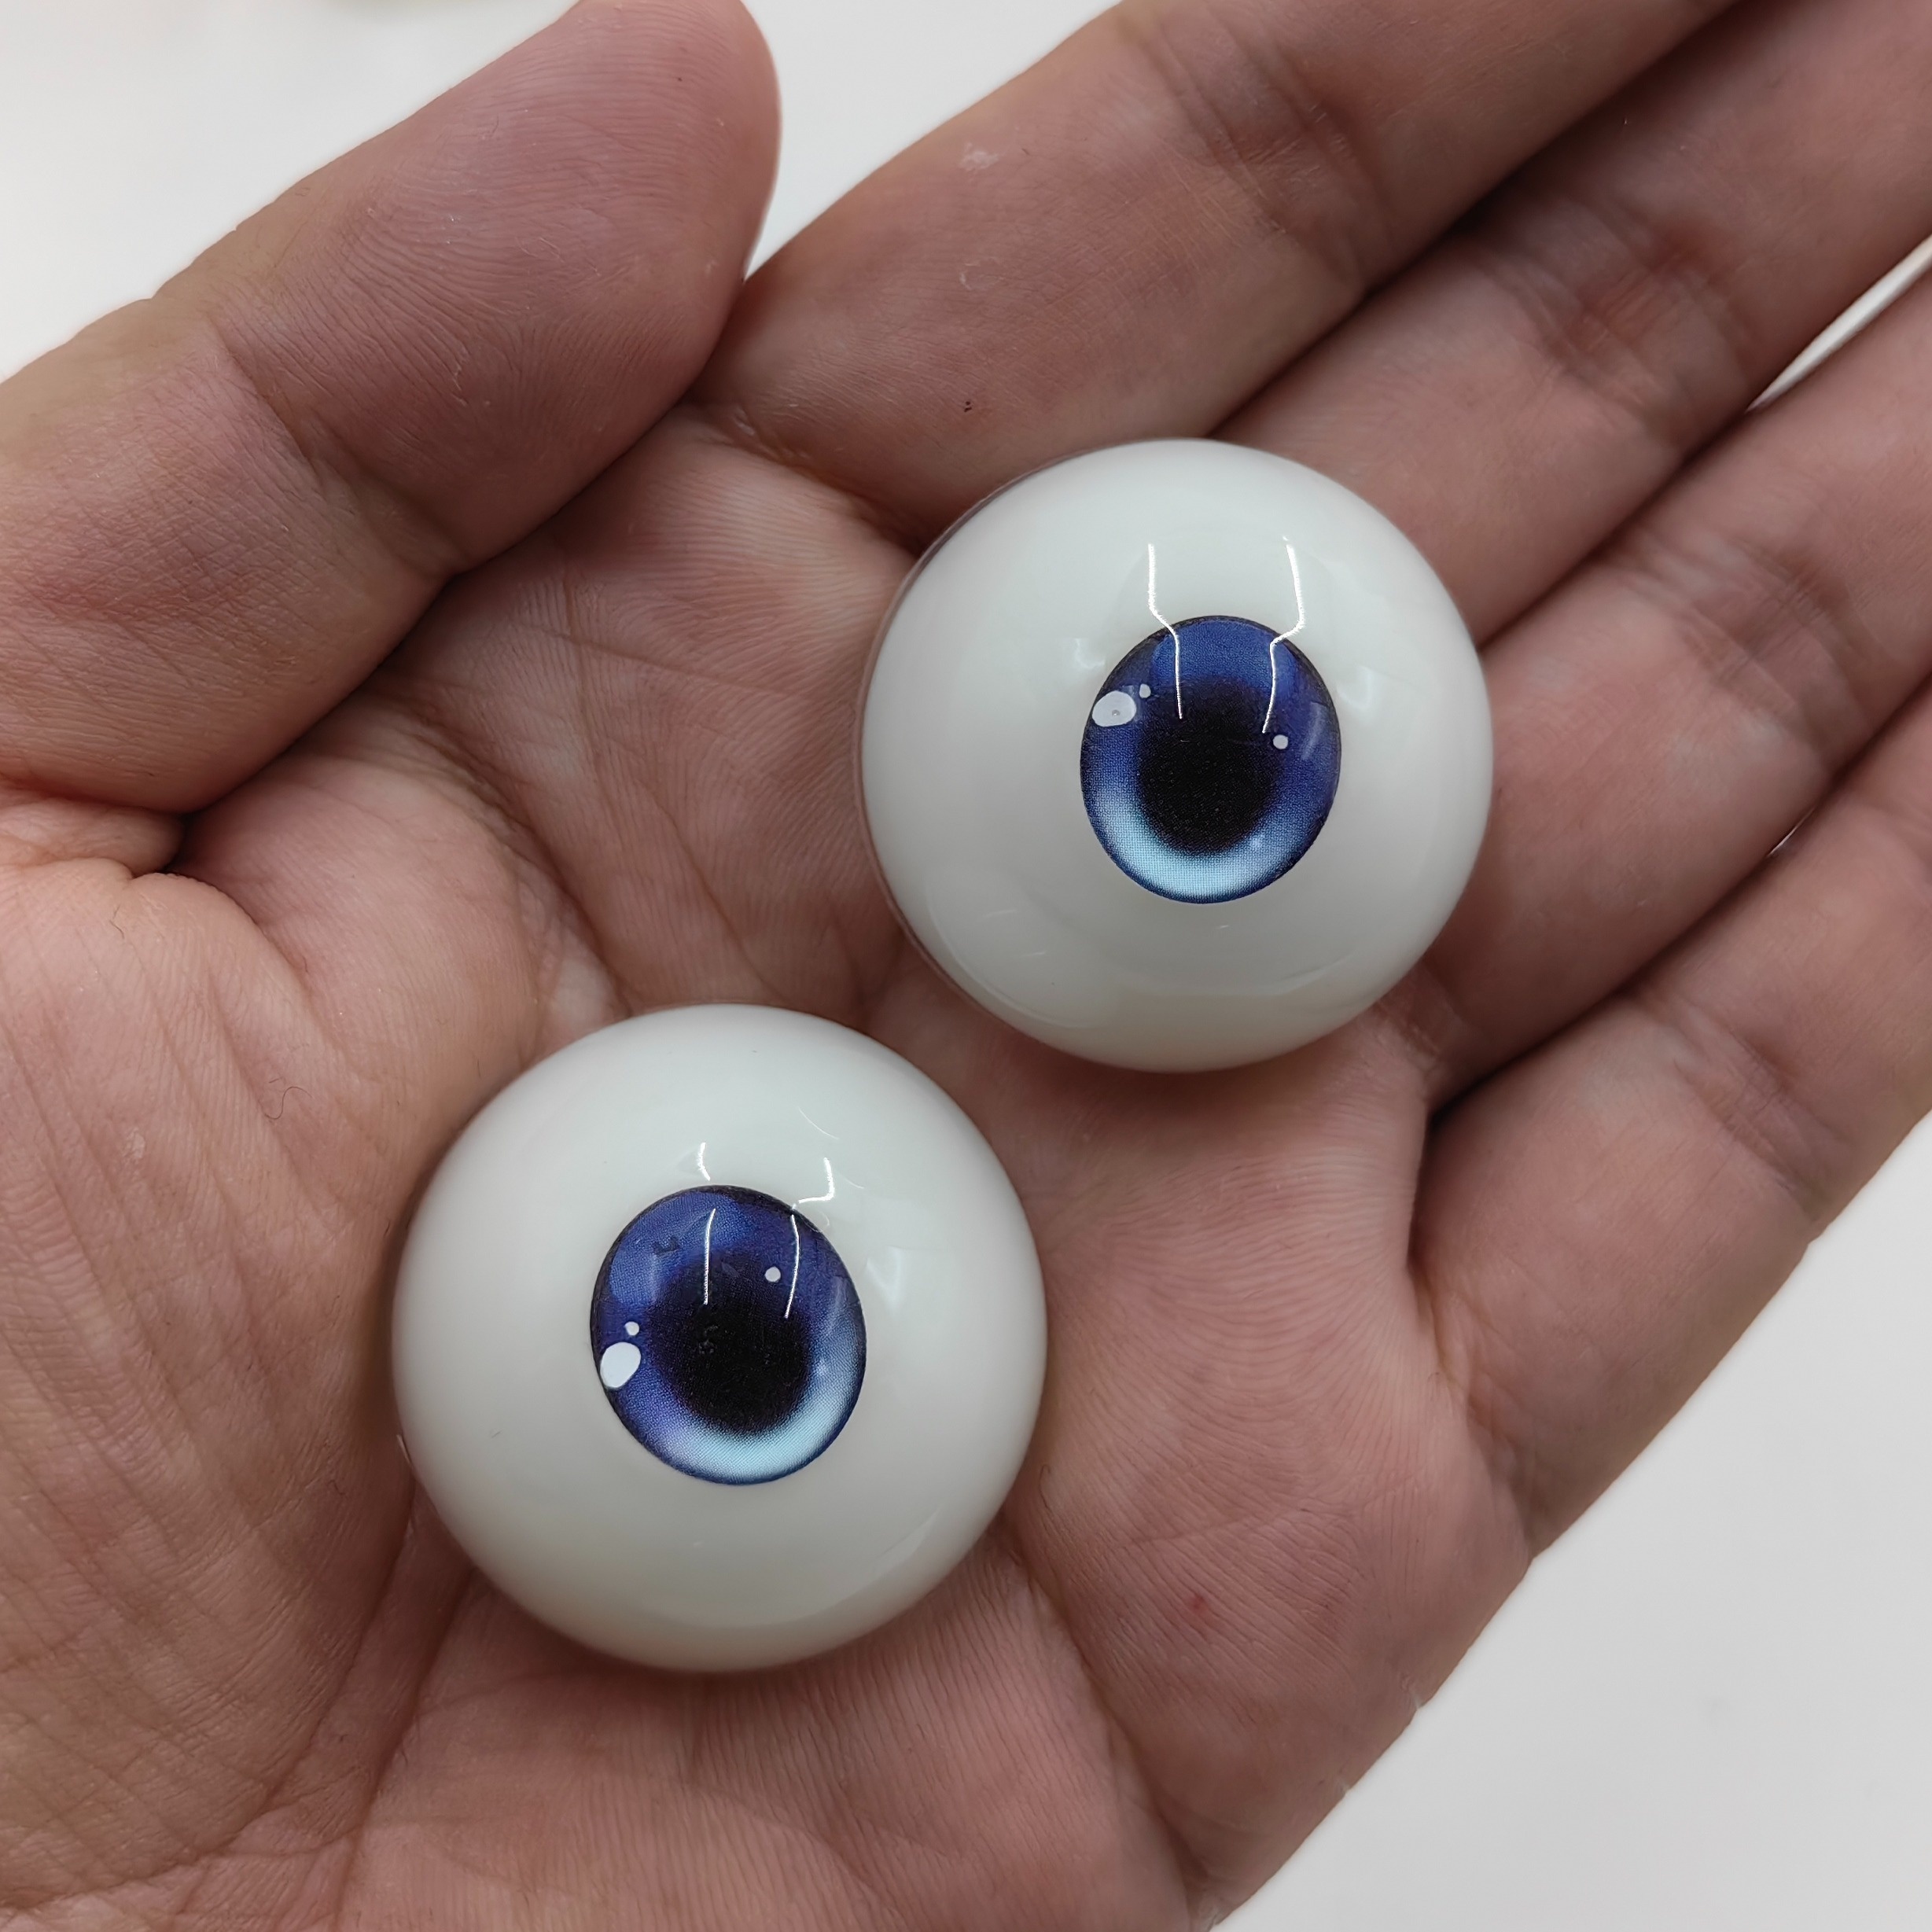 Realistic Acrylic Eyeball, 2 Pairs Plastic Hollow Eyeball, 30mm Beige Diameter Half Round Fake Eyes for Halloween Party Decor Art Dolls Props, Blue